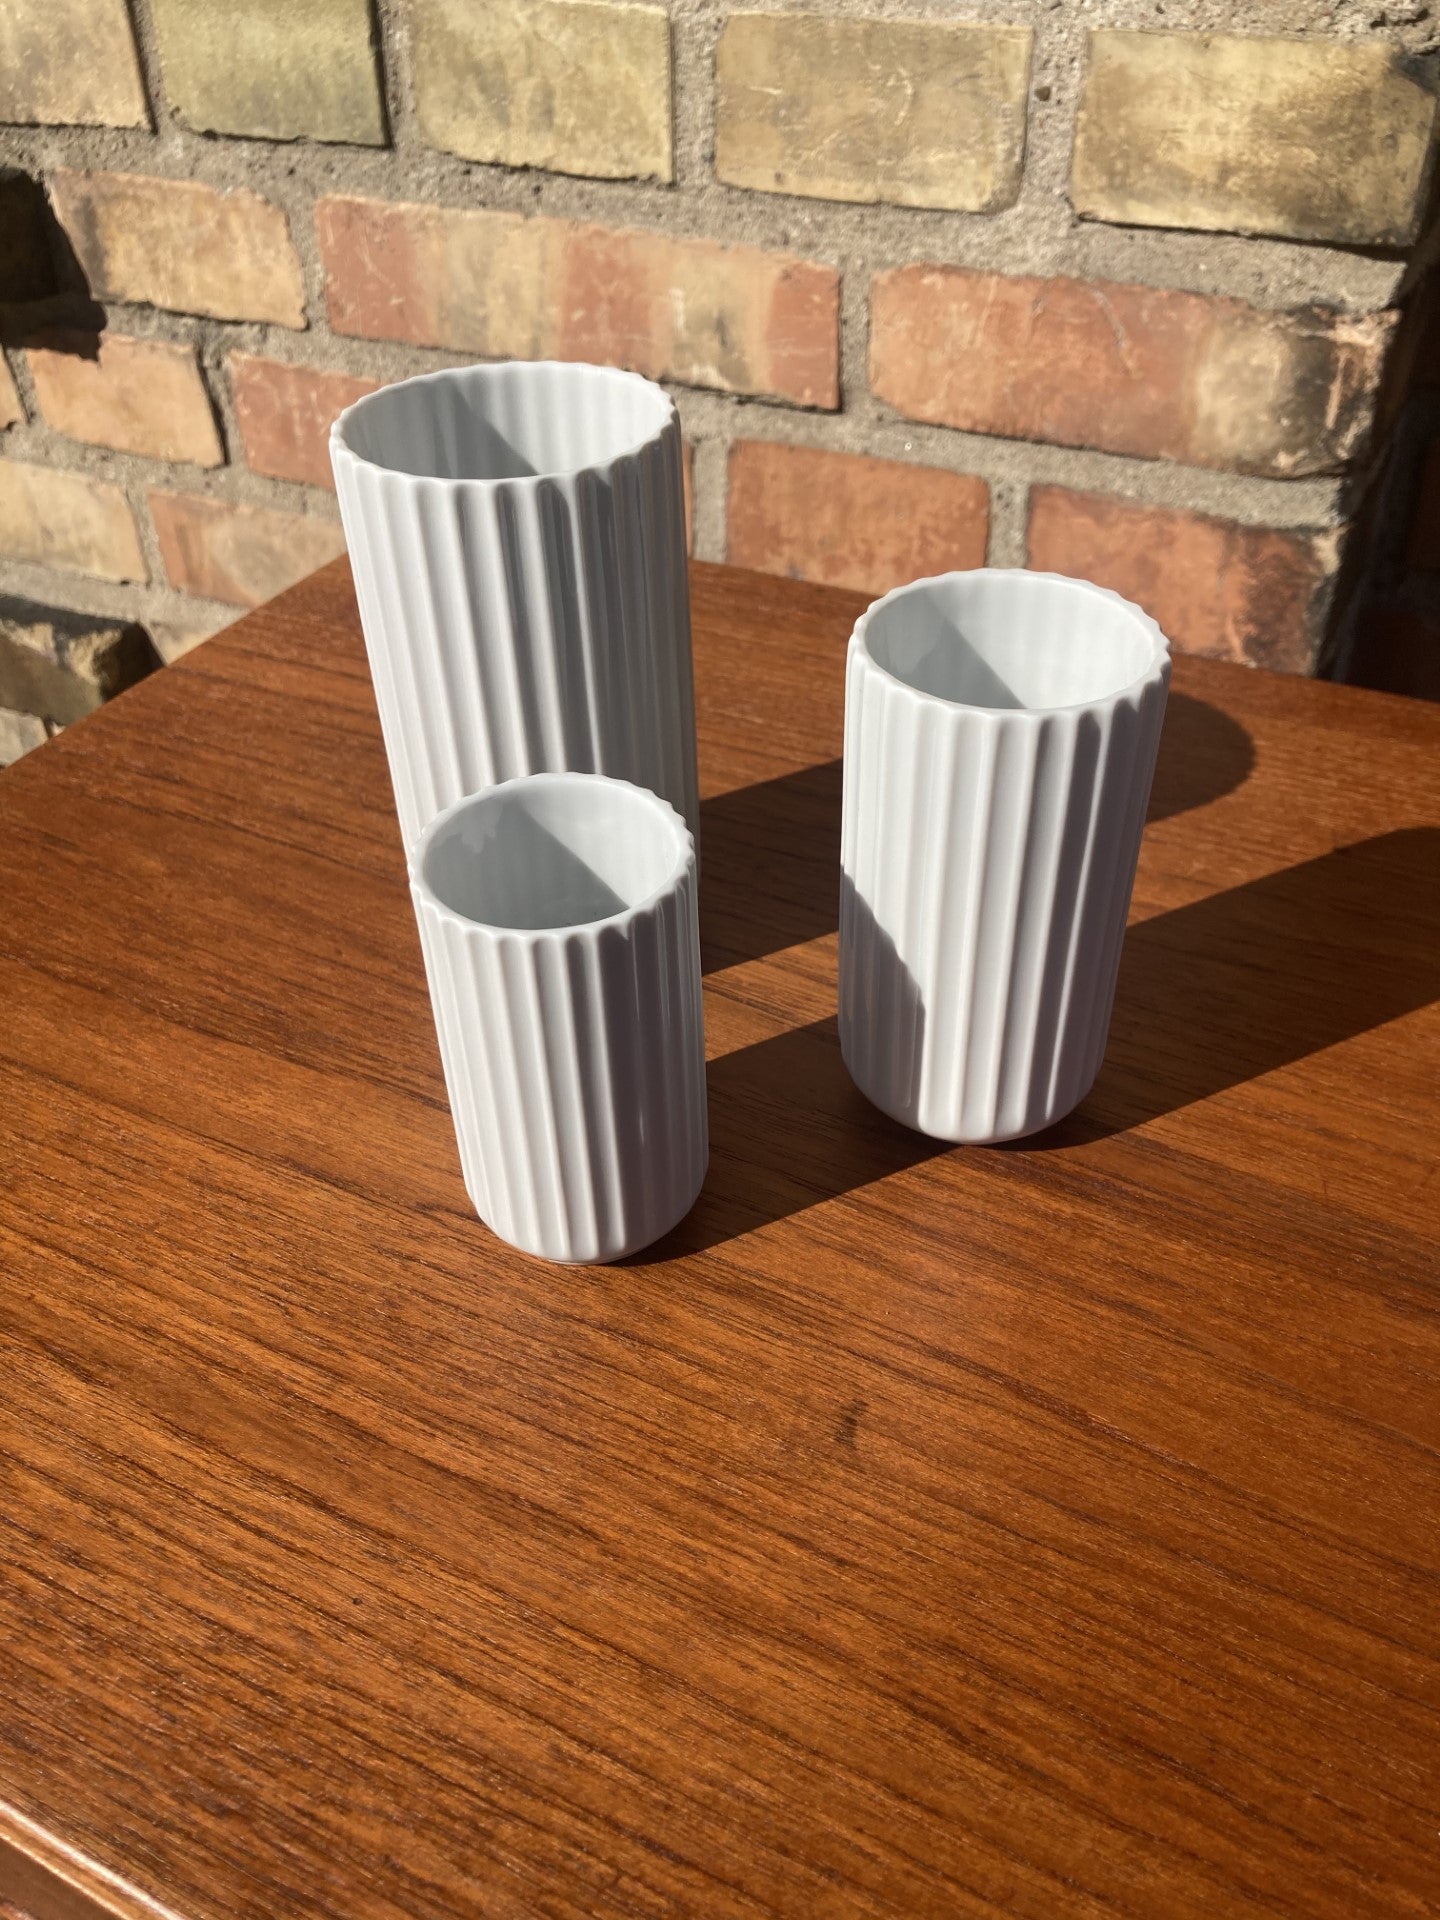 3 Lyngby porcelain vases - no. 0605